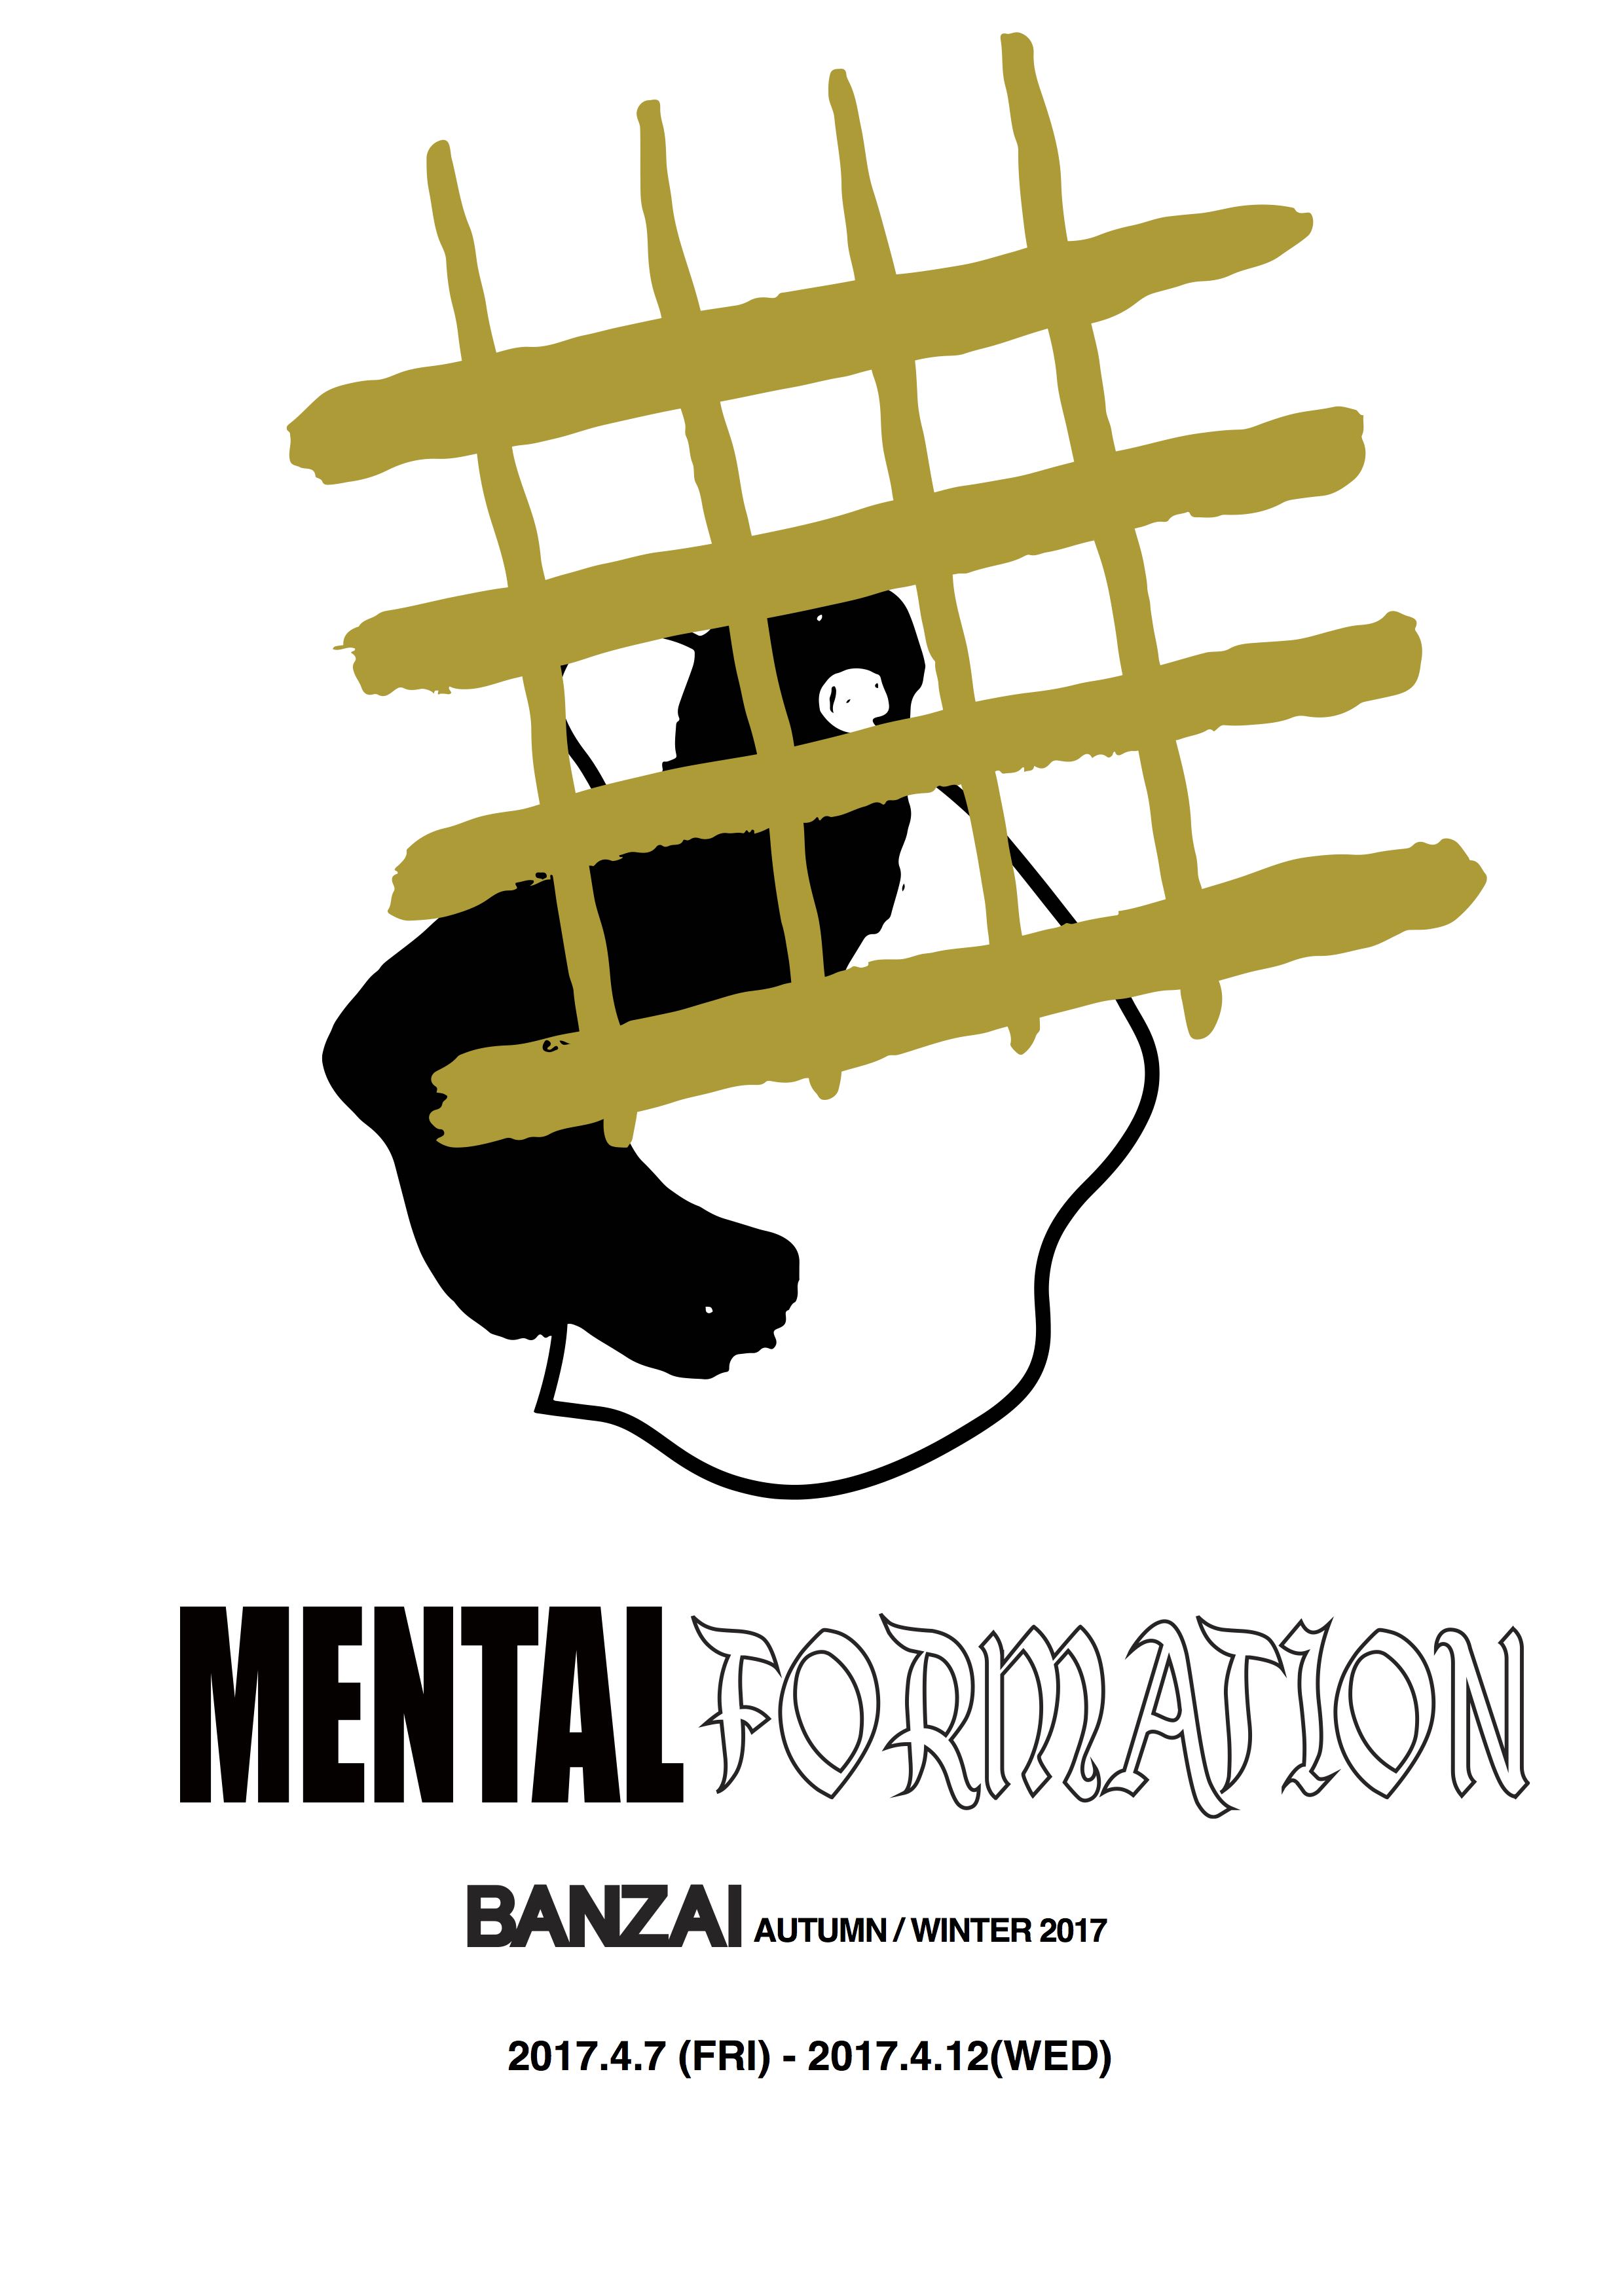 banzai_mentalformation_light